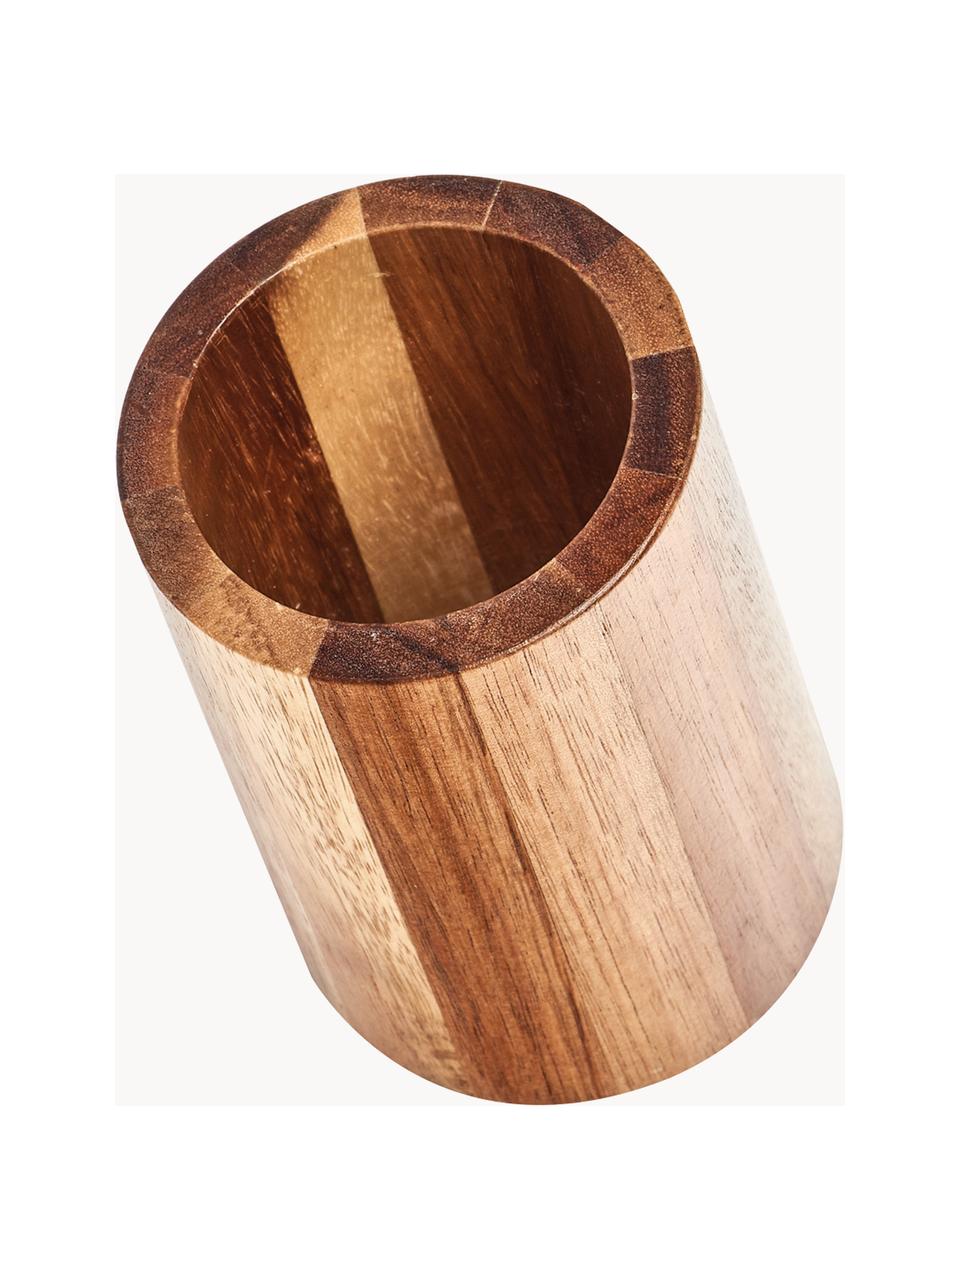 Kelímek na zubní kartáčky z akáciového dřeva Wood, Akáciové dřevo, Akáciové dřevo, Ø 7 cm, V 11 cm